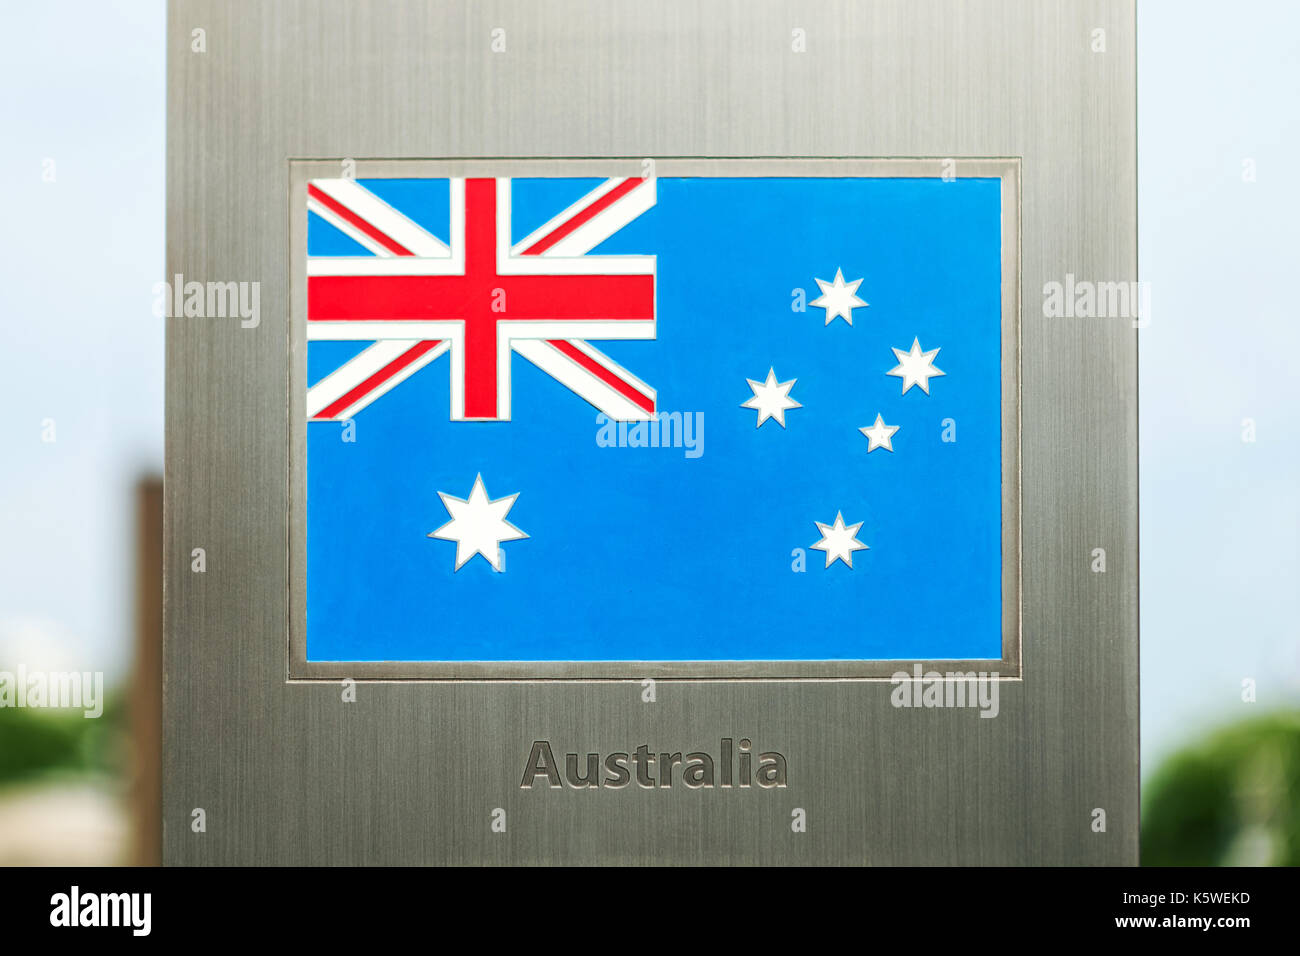 National flags on metal pole series - Australia Stock Photo